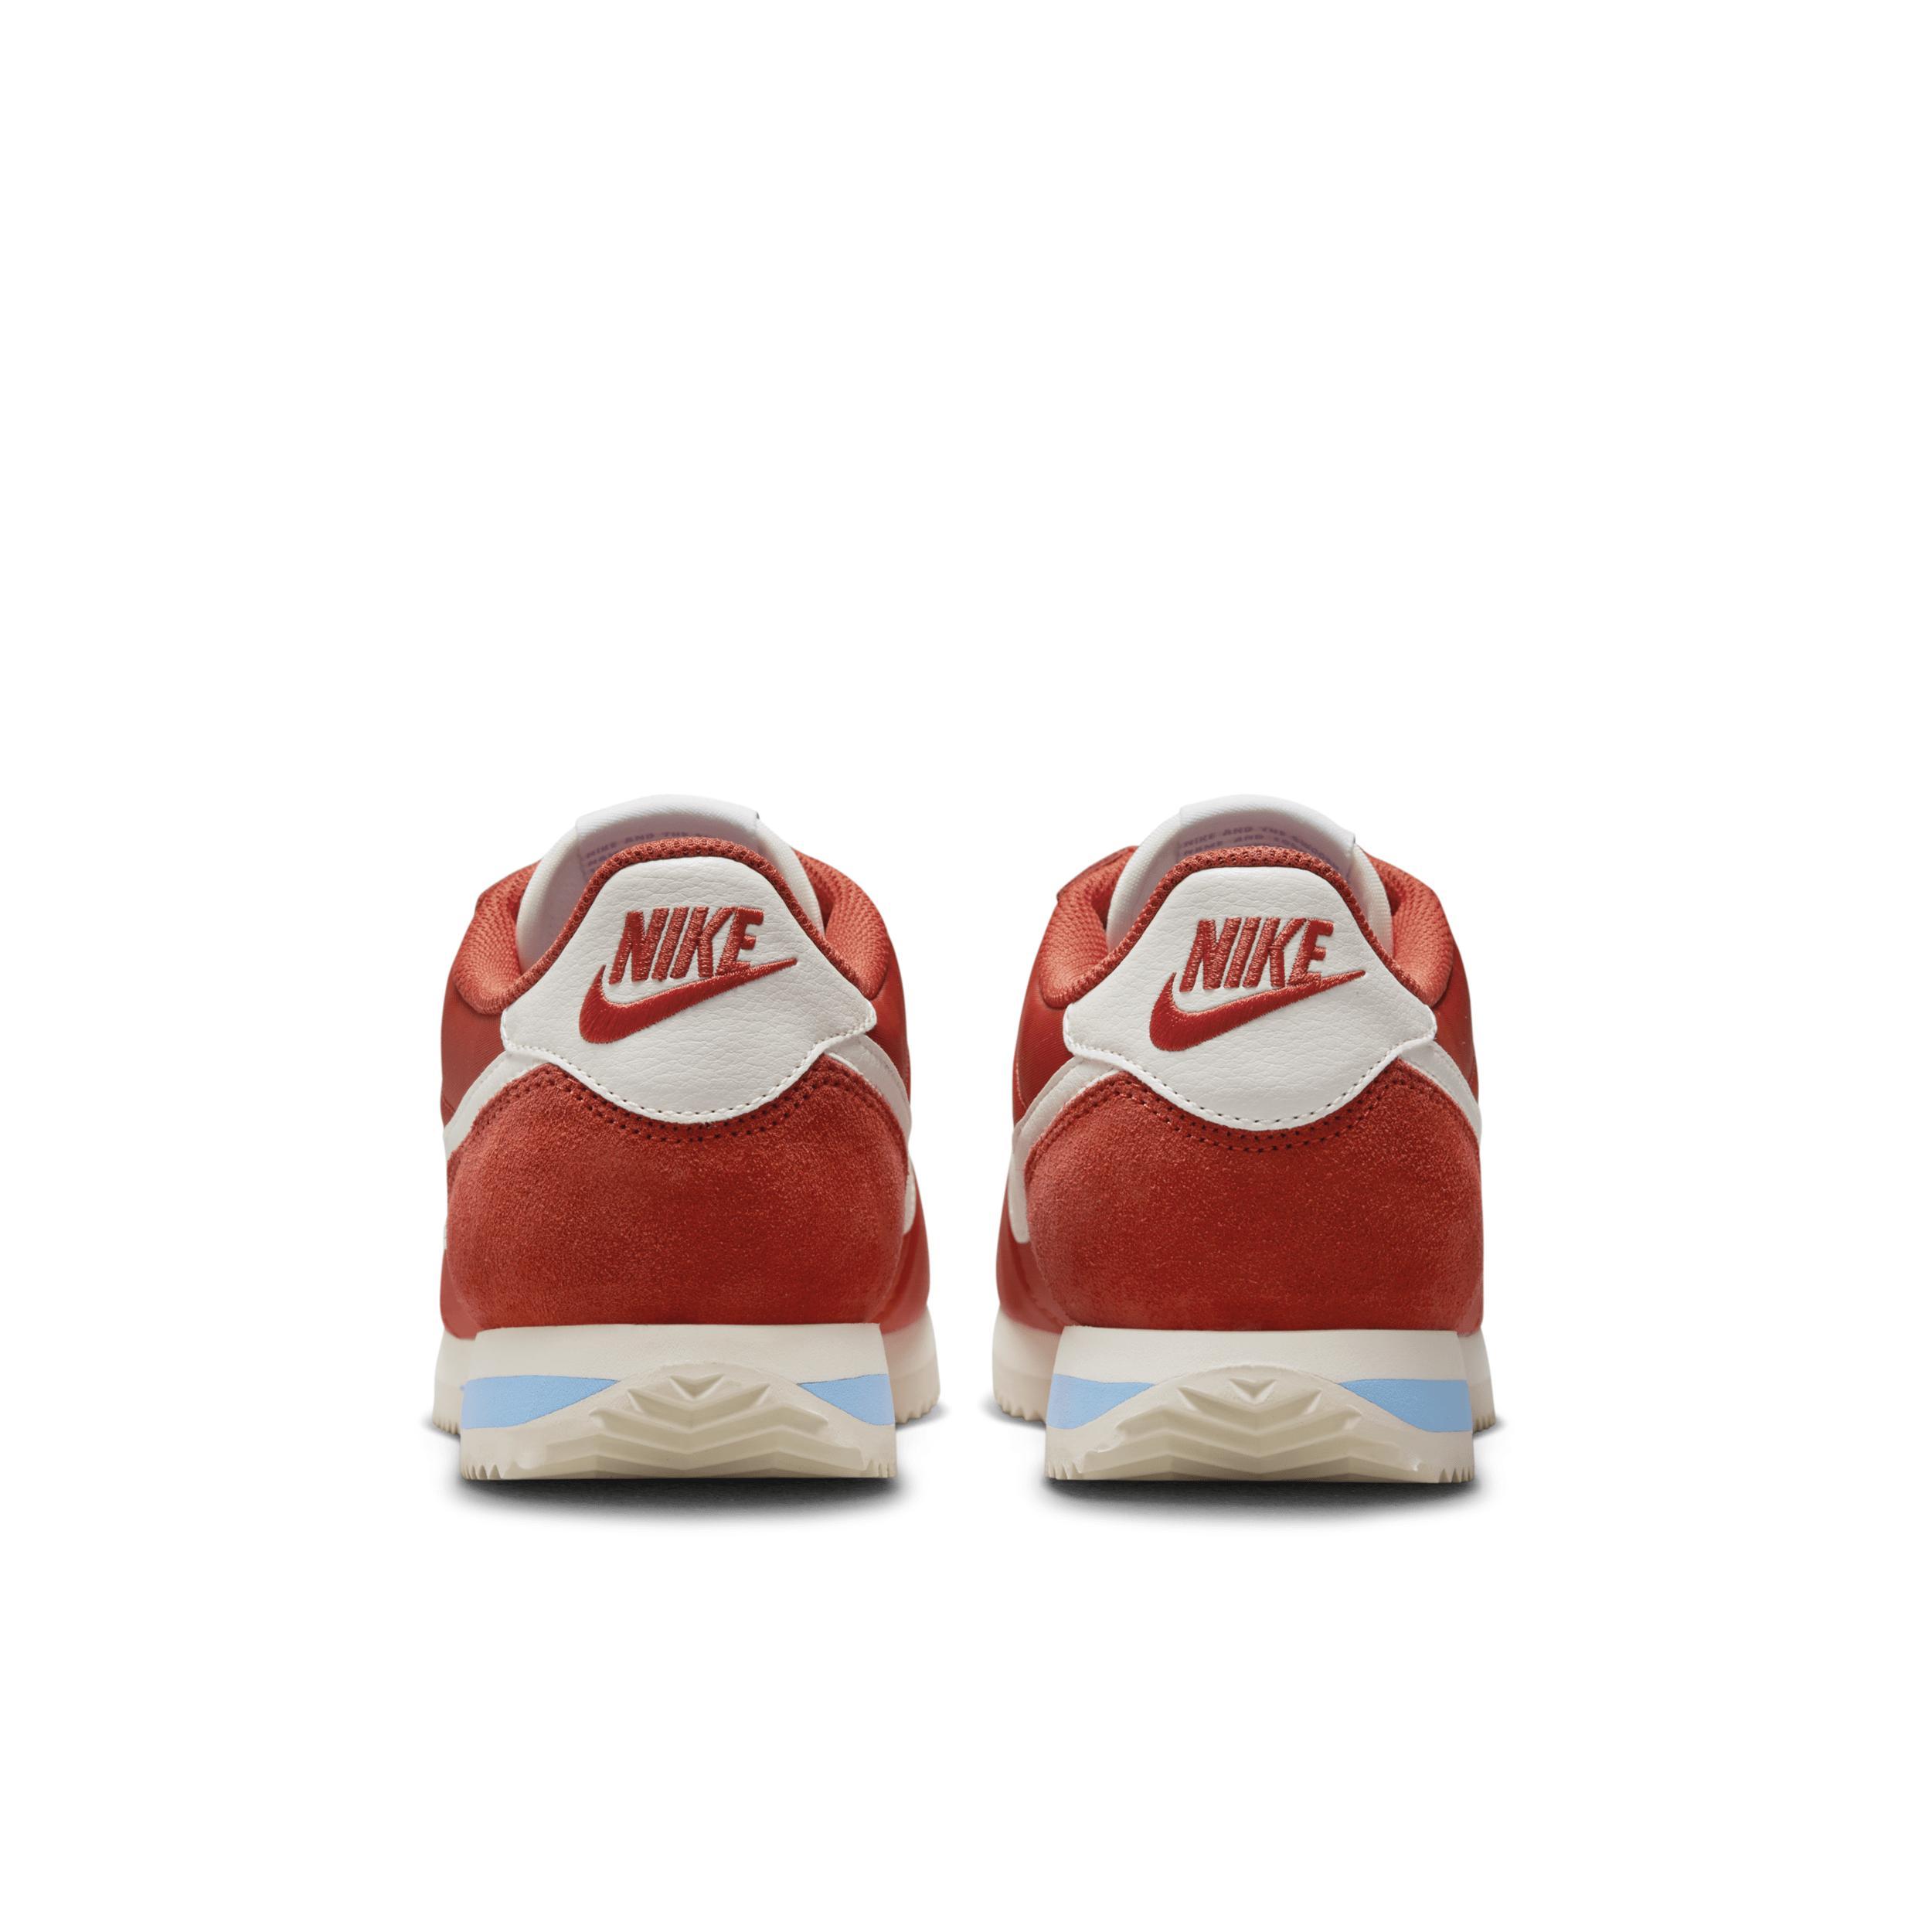 Nike Women's Cortez Shoes Product Image